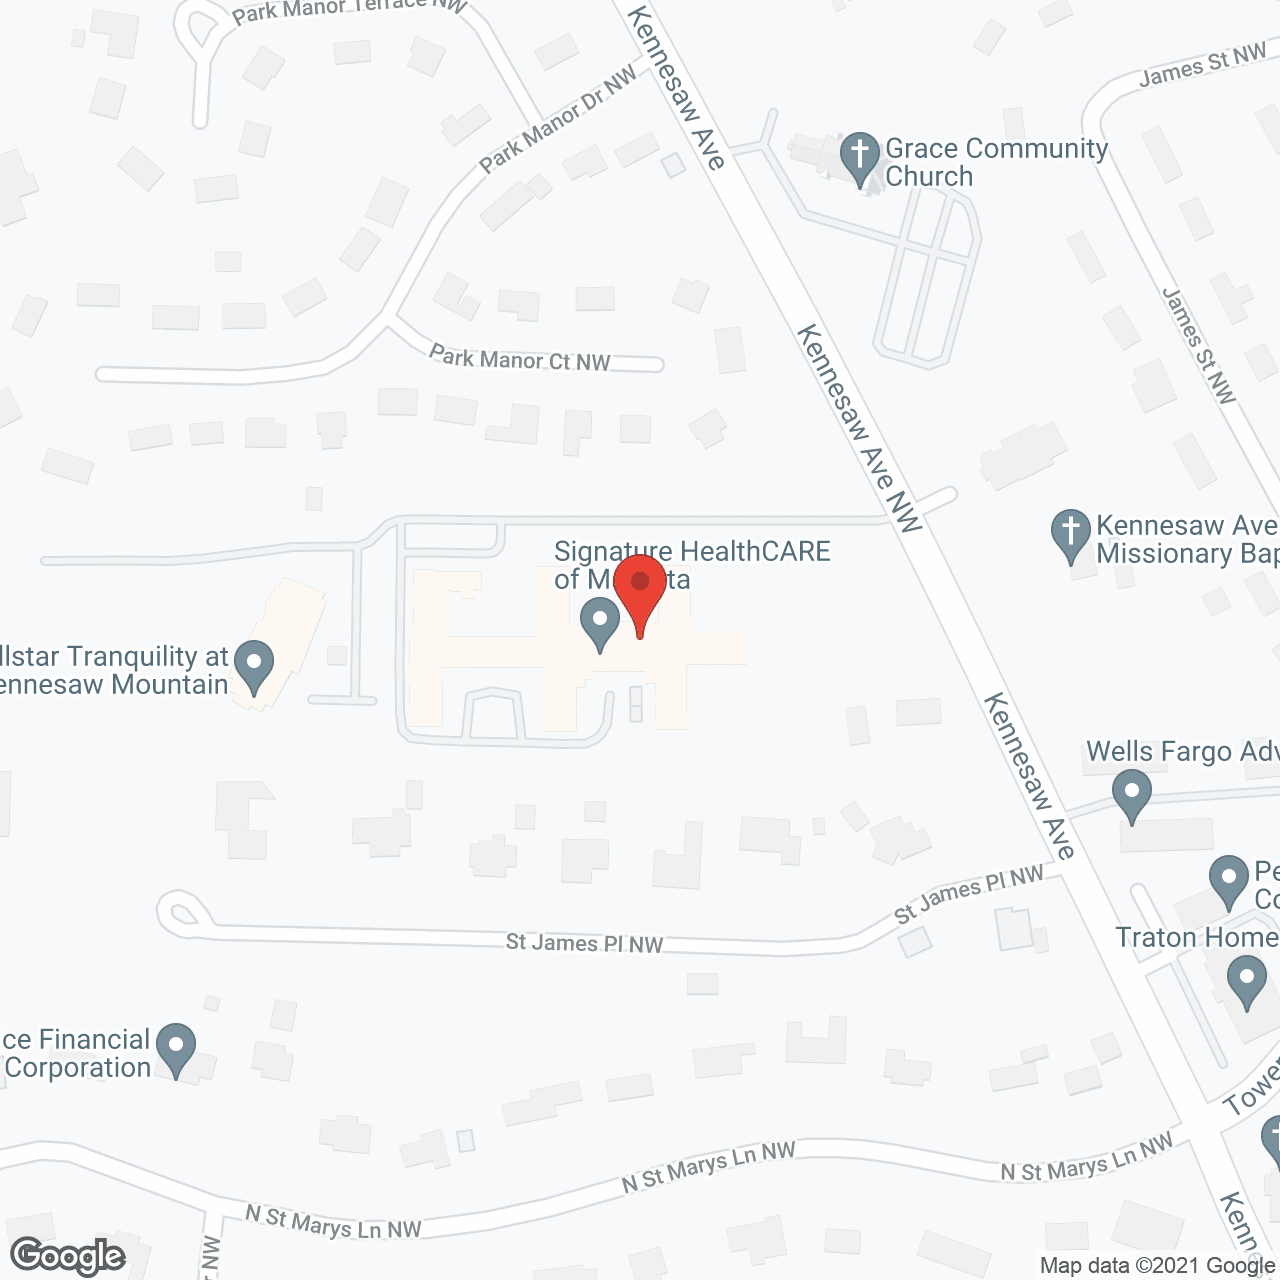 Marietta Center for Nursing and Healing in google map